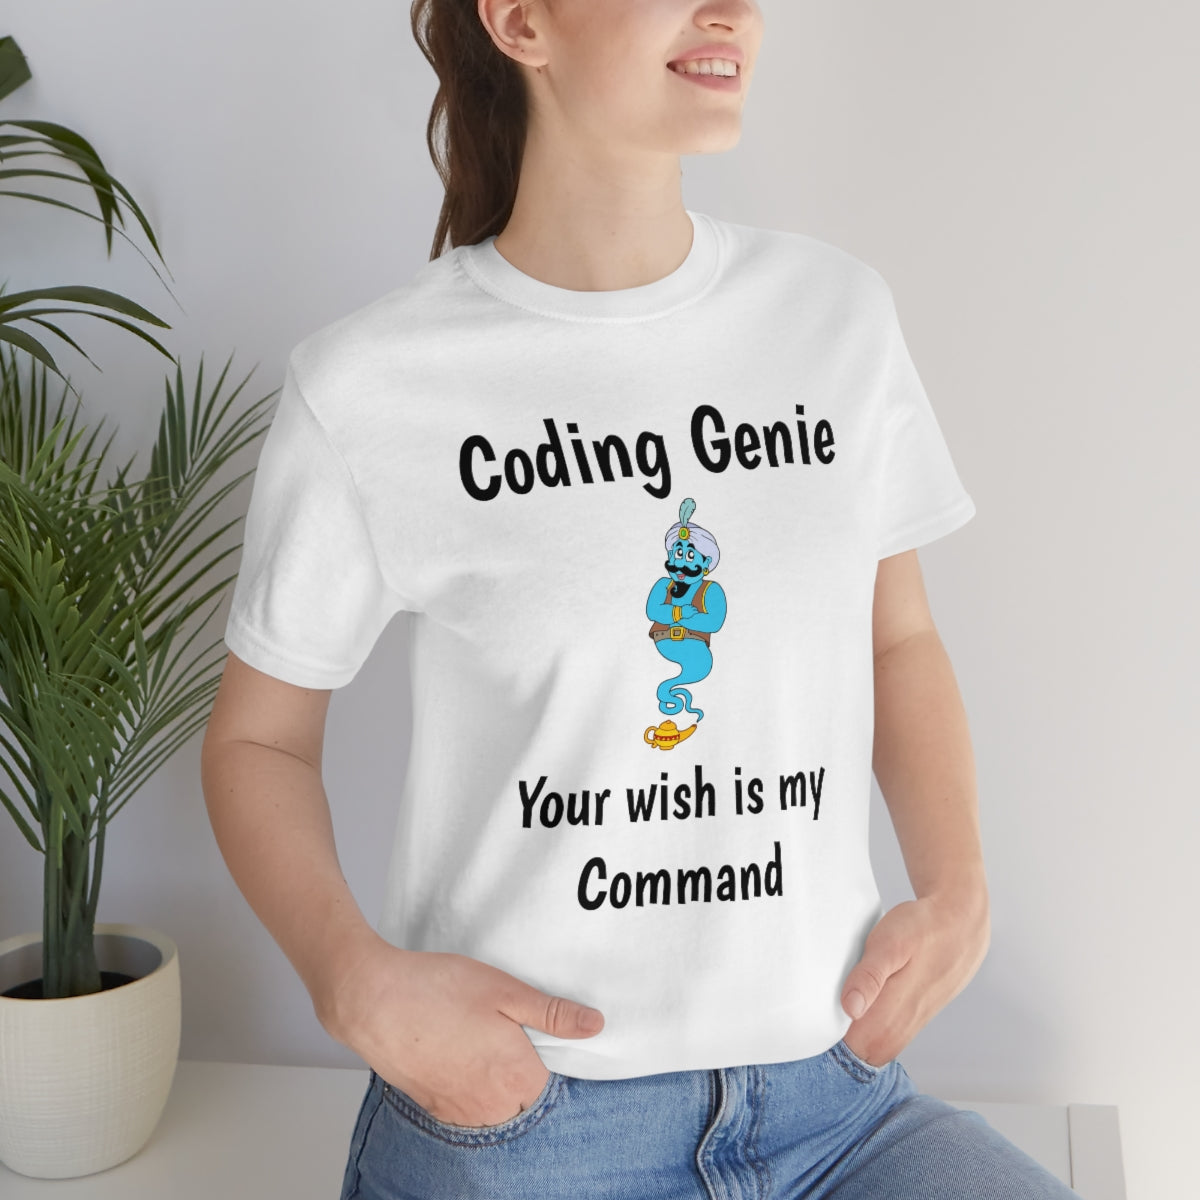 Coding Genie - Funny Tech - Unisex Short Sleeve Tee